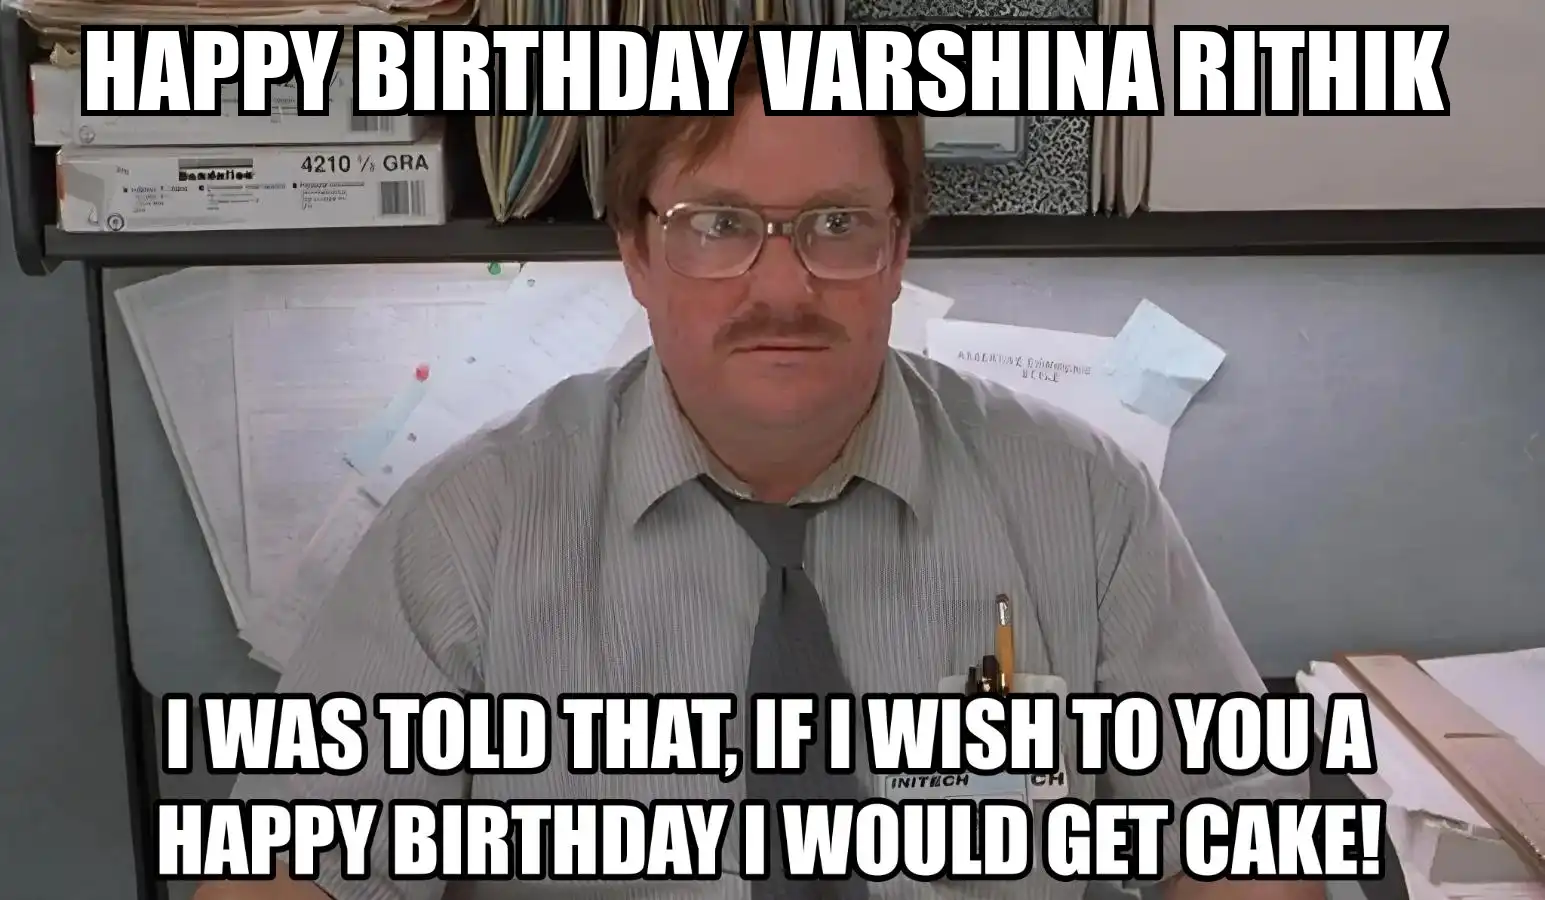 Happy Birthday Varshina rithik I Would Get A Cake Meme